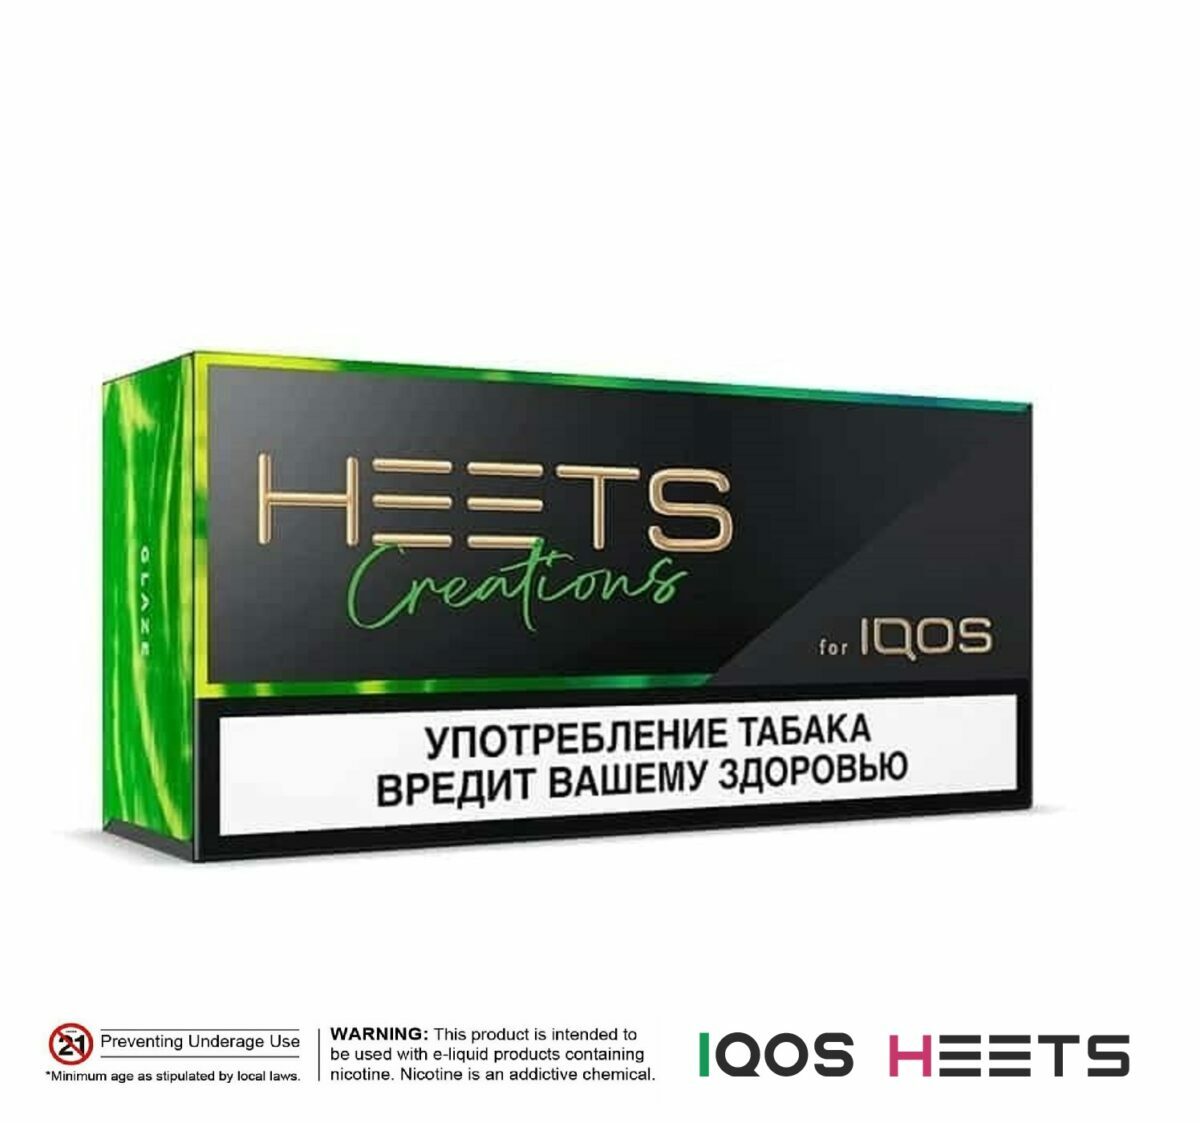 HEETS Creations Glaze UAE- New Limited Edition Heated Sticks